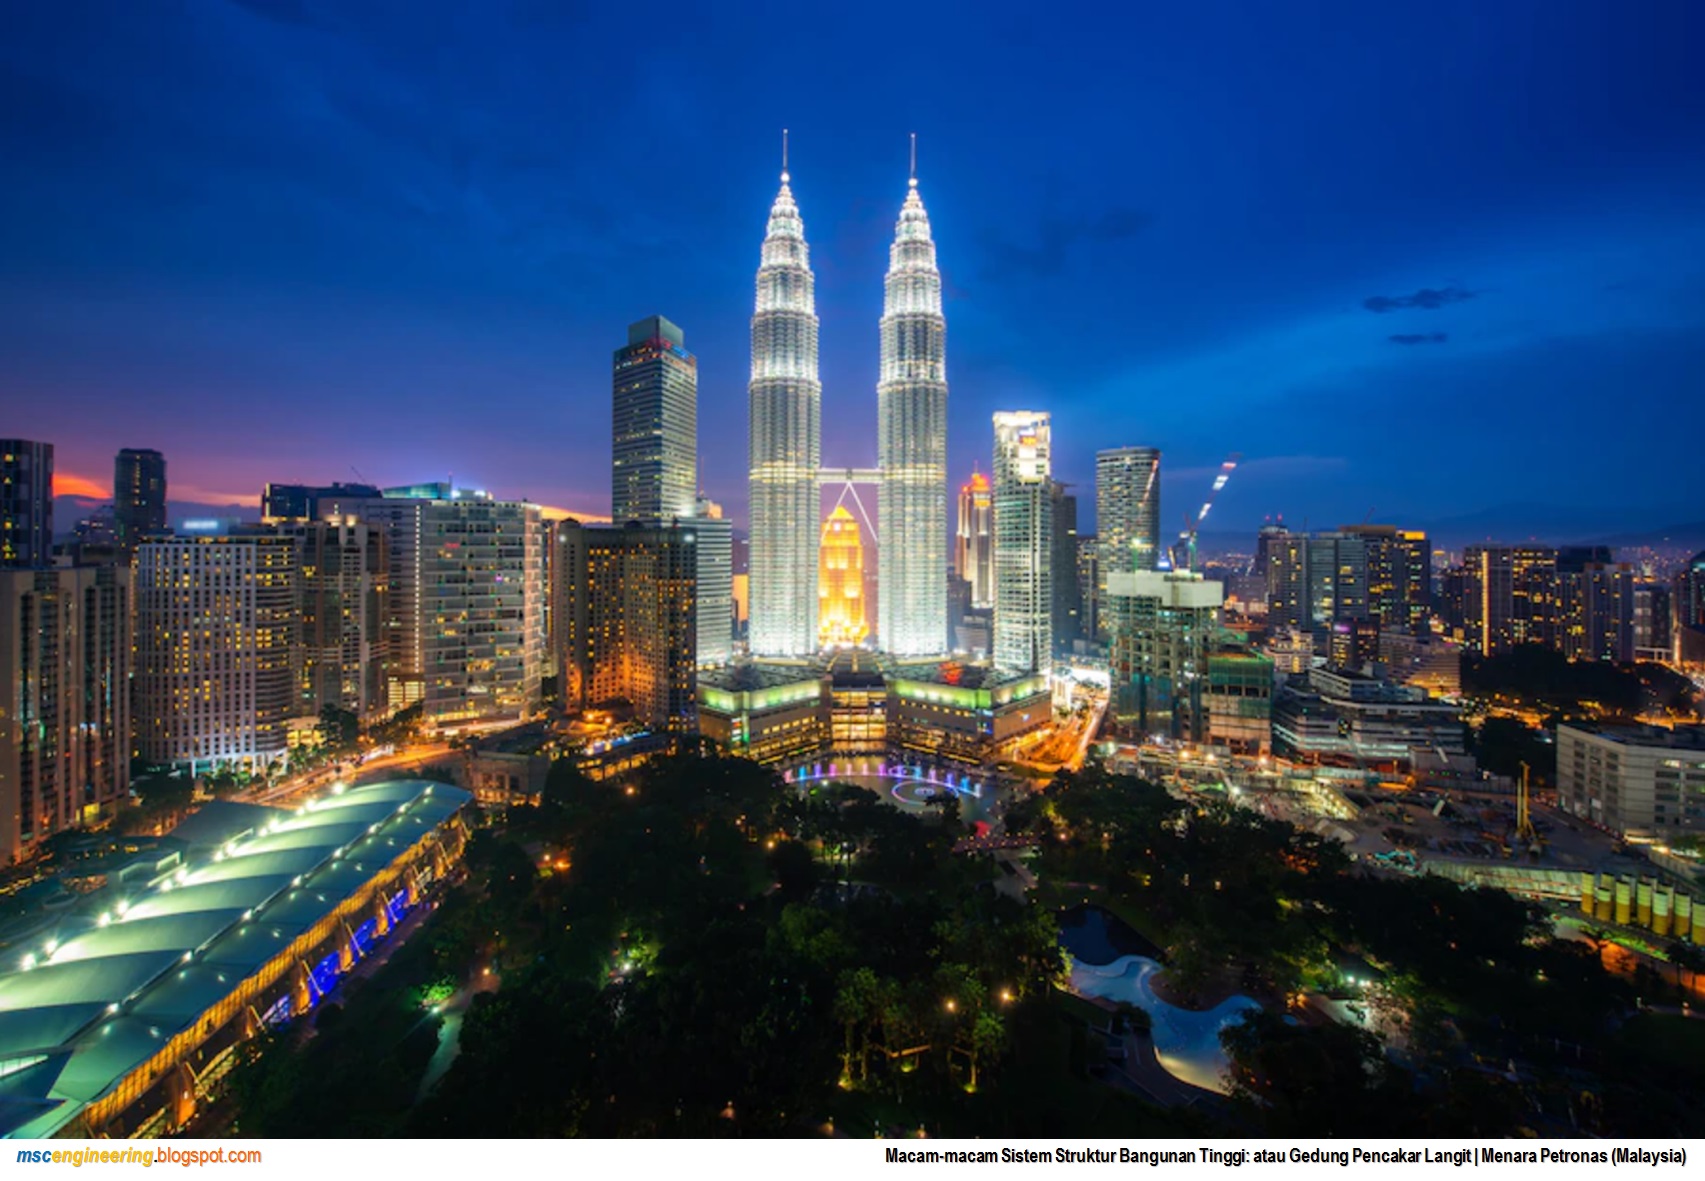 <a href="https://www.mscengineeringgre.com/"><img src="Macam-macam Sistem Struktur Bangunan Tinggi atau Gedung Pencakar Langit Menara Petronas Malaysia.jpg" alt="Cara Menghitung Struktur Bangunan 3 Lantai"></a>